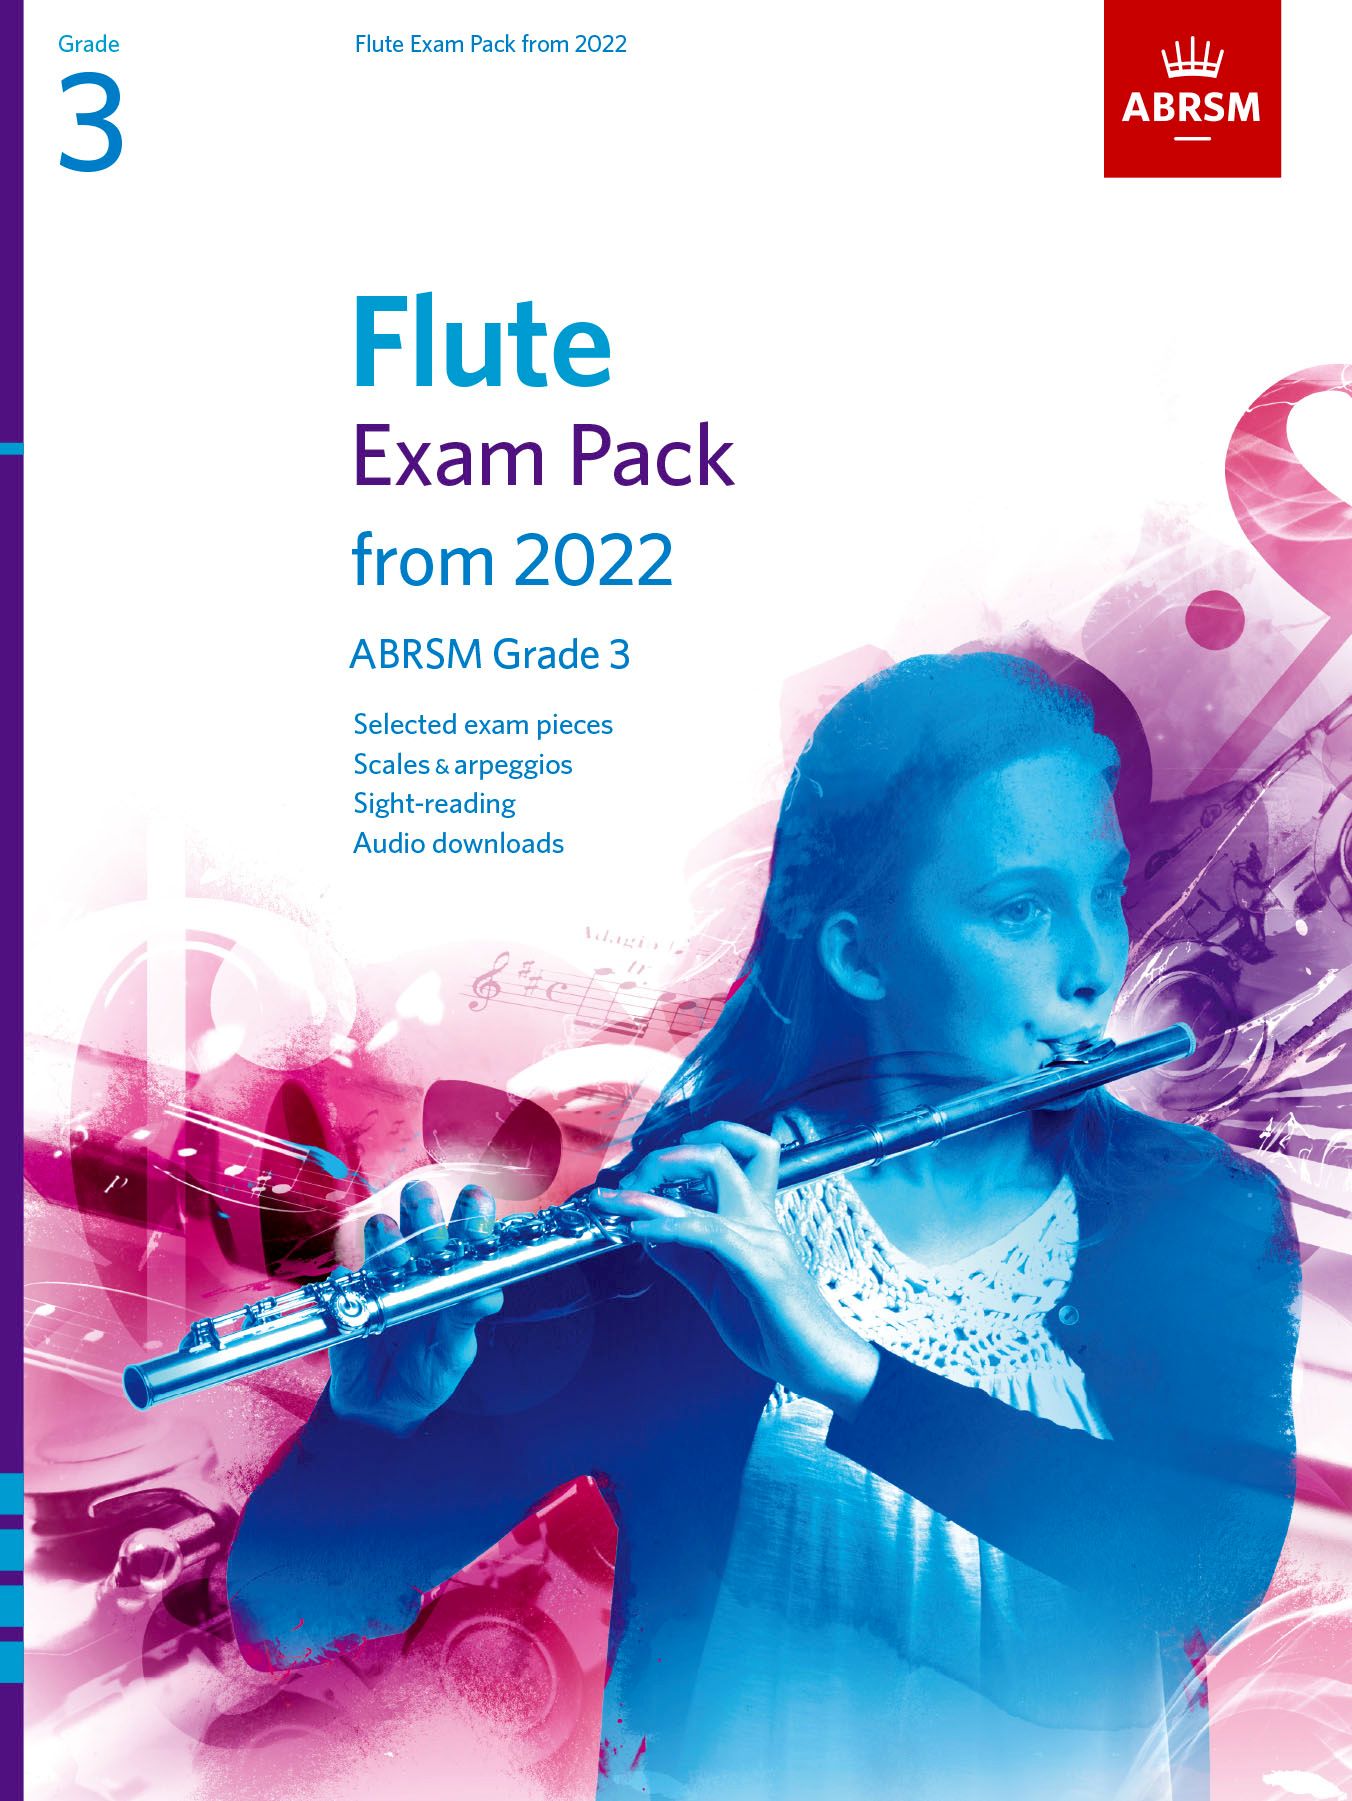 Flute Exam Pack from 2022, ABRSM Grade 3